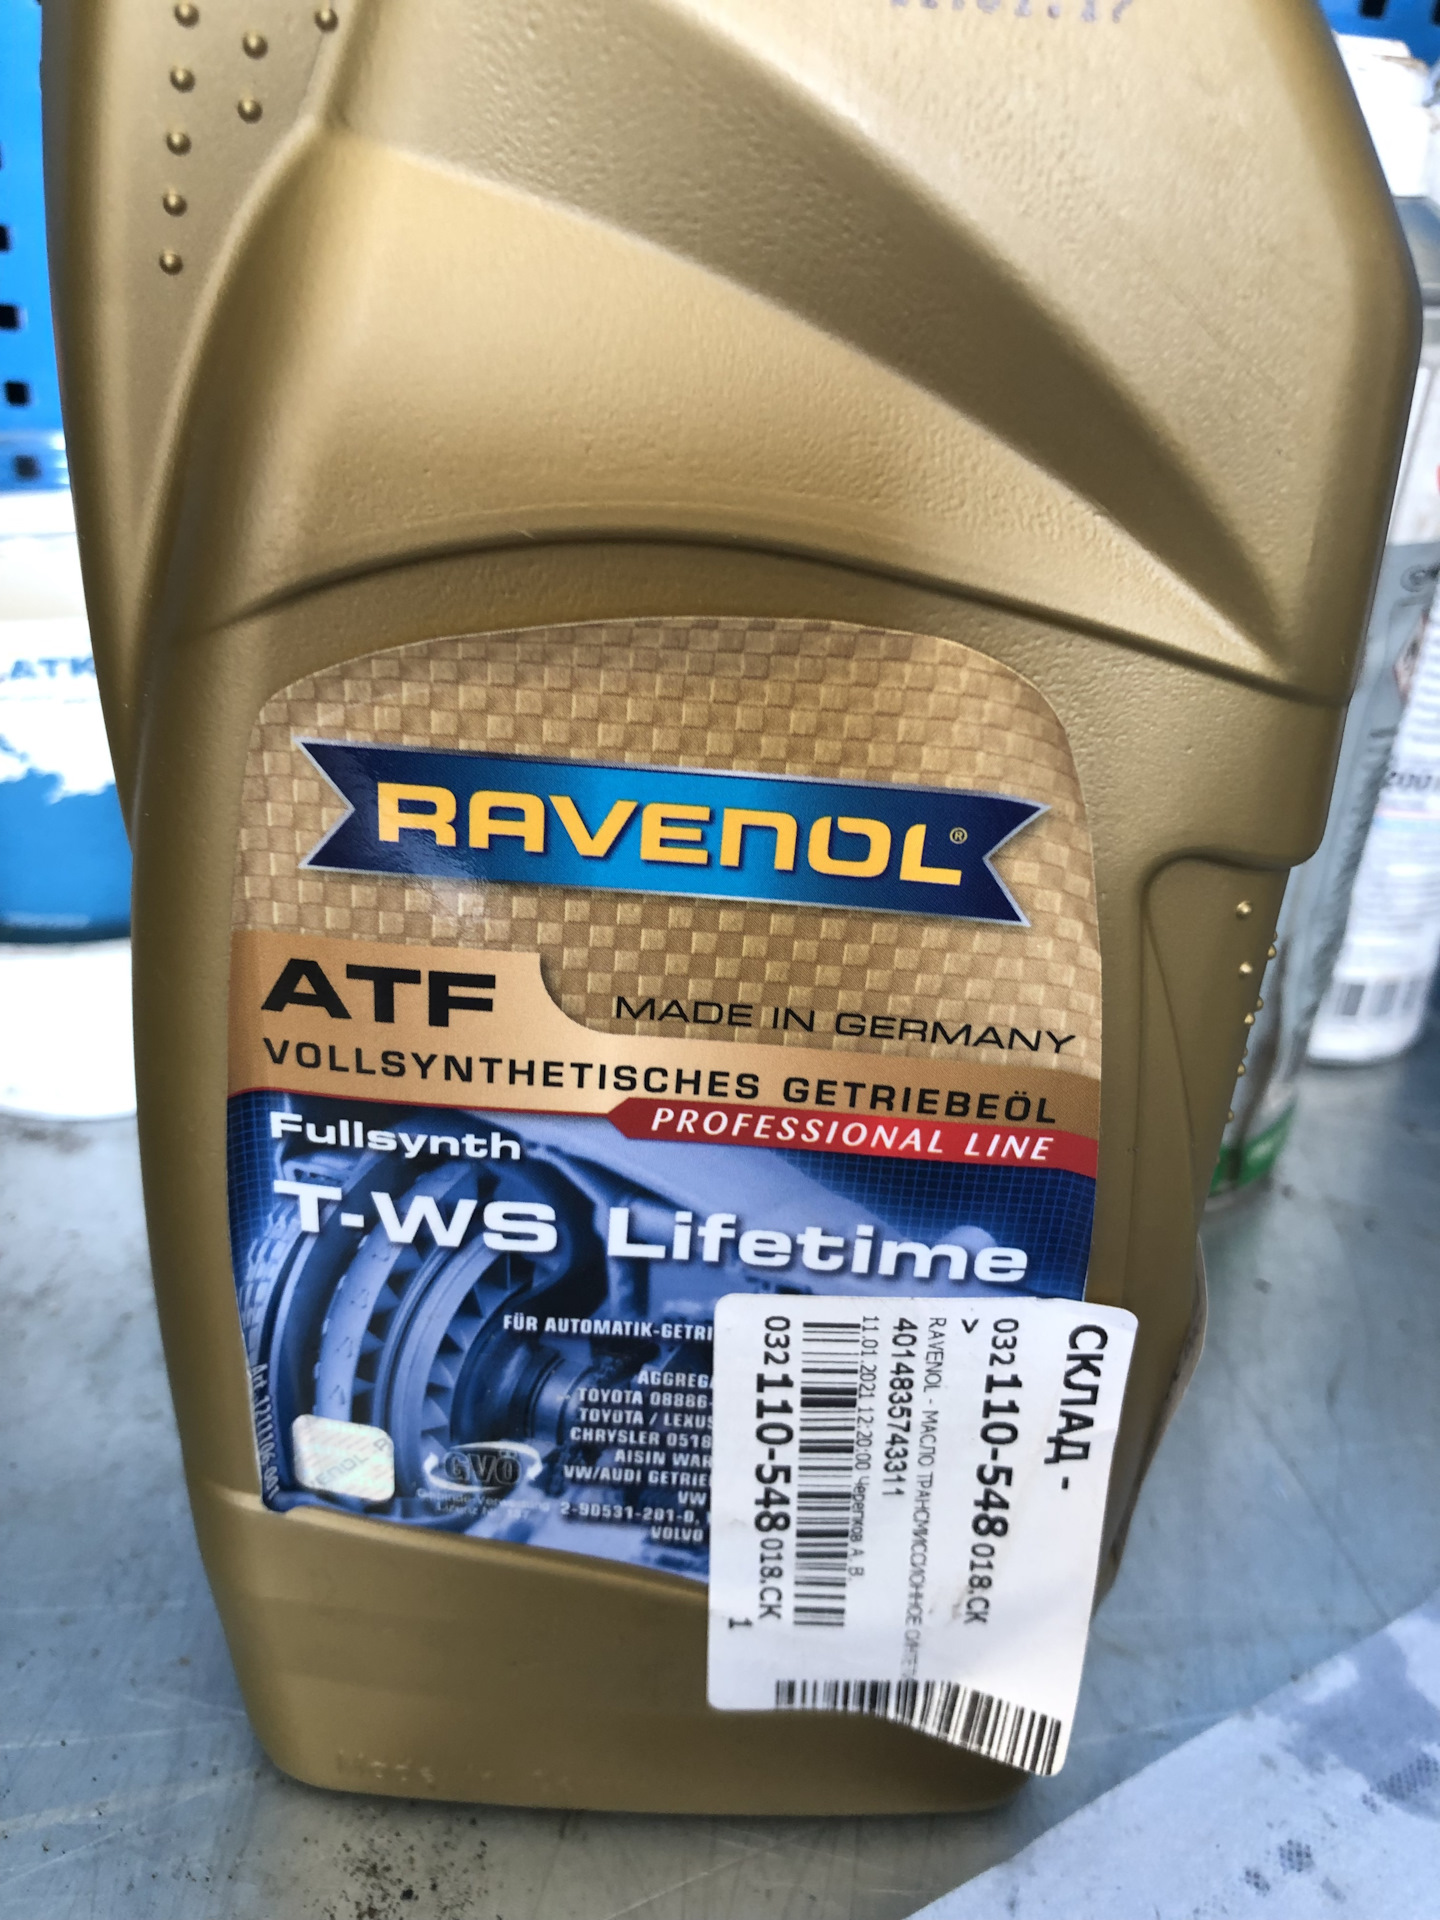 Ravenol atf t ws. Ravenol ATF T-WS Lifetime. Масло в коробке Равенол цвет. Замена масла в АКПП Порше Кайен. Ravenol ATF TVS Lifetime в Кемерово цена.